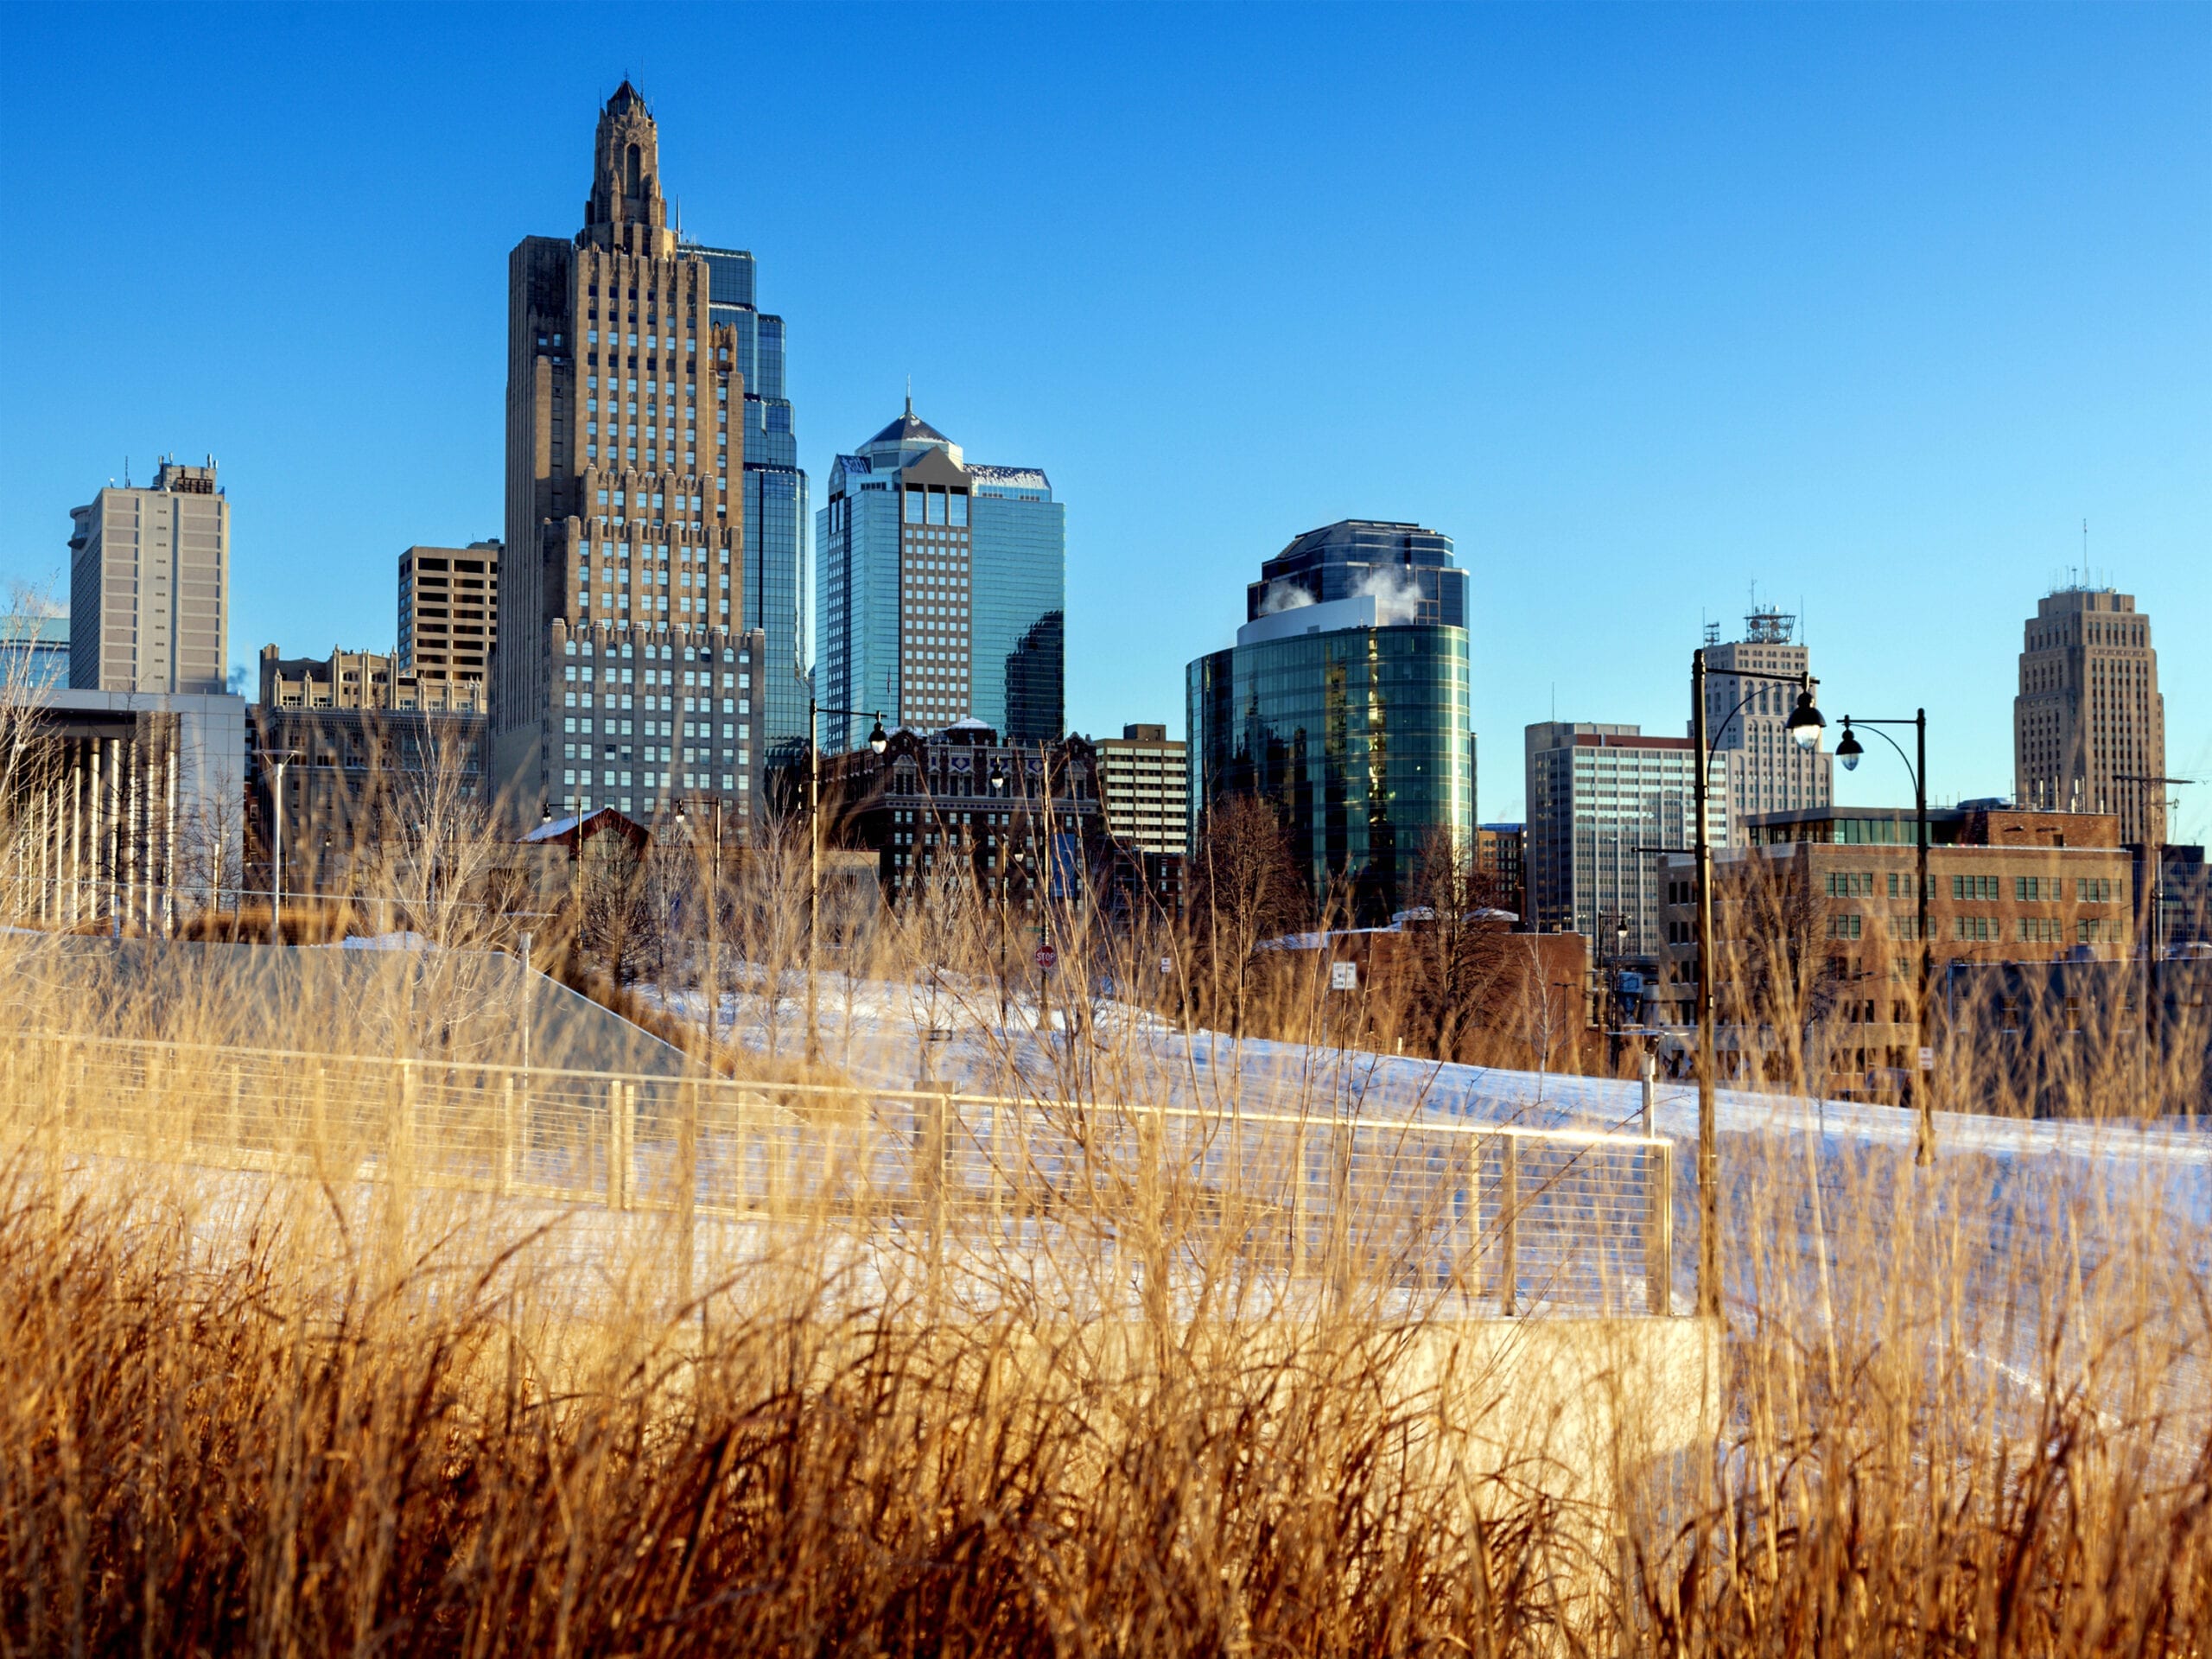 The Kansas City skyline on a winter morning.